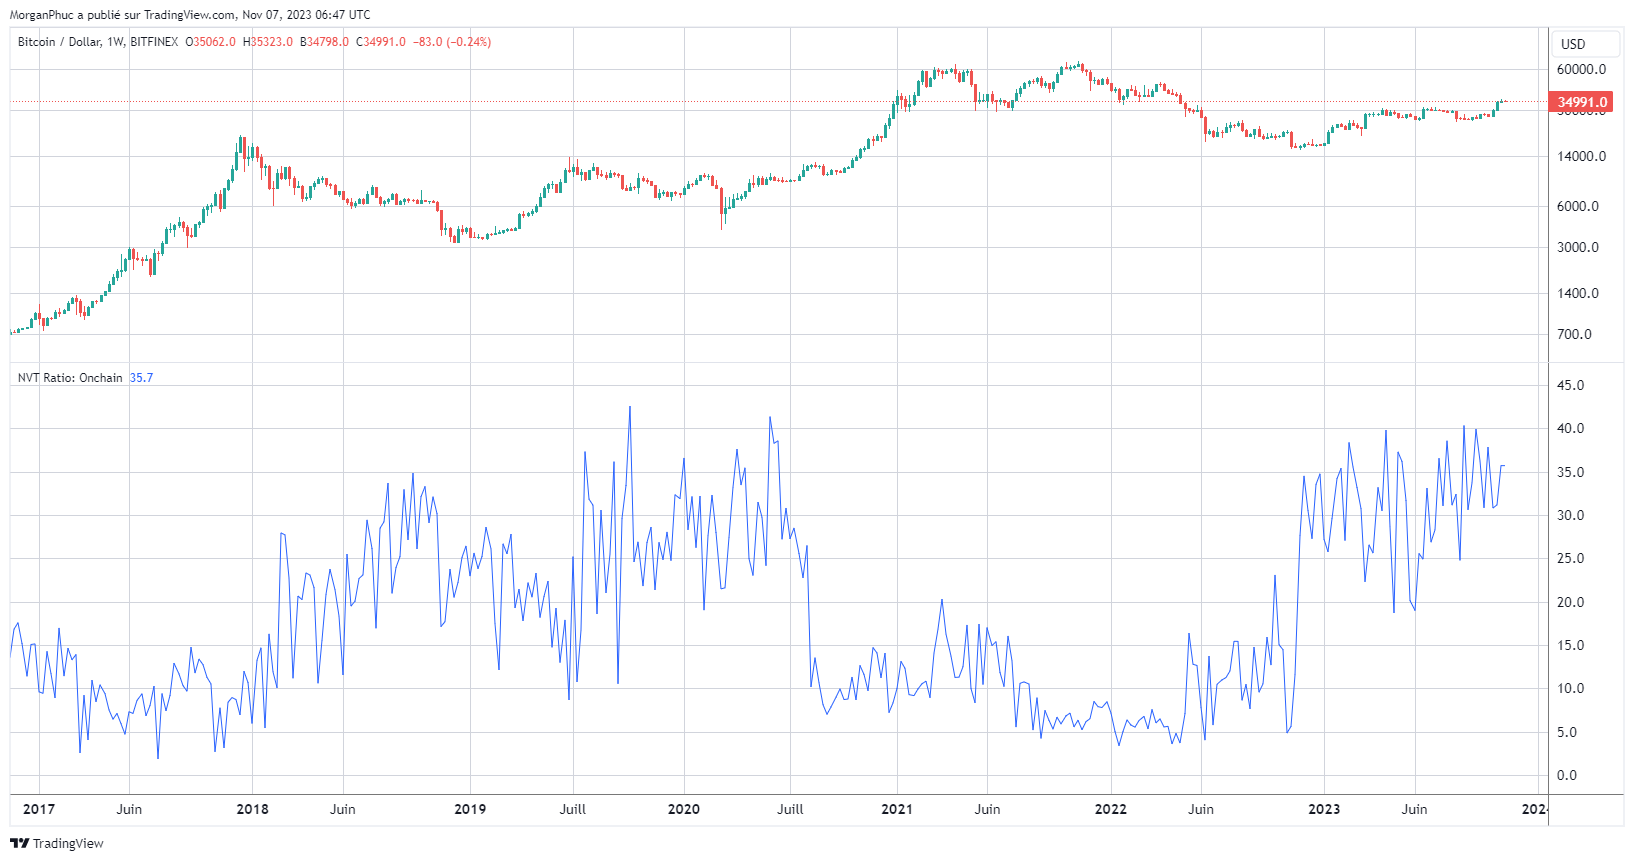 NVT Ratio = Market Capitalization / Trading Volume (in dollars)